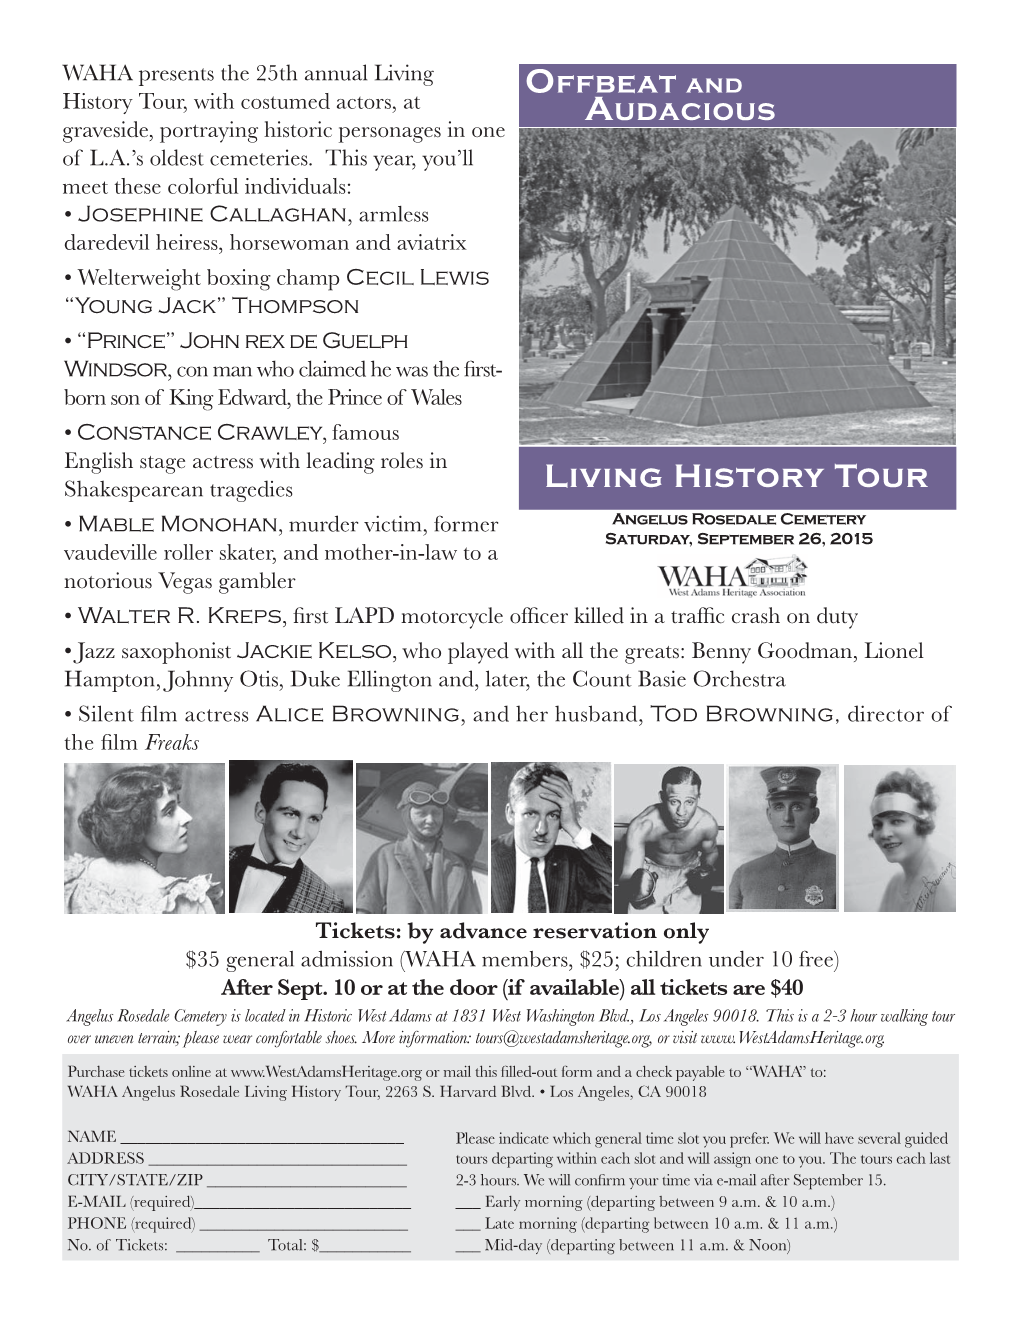 Living History Tour